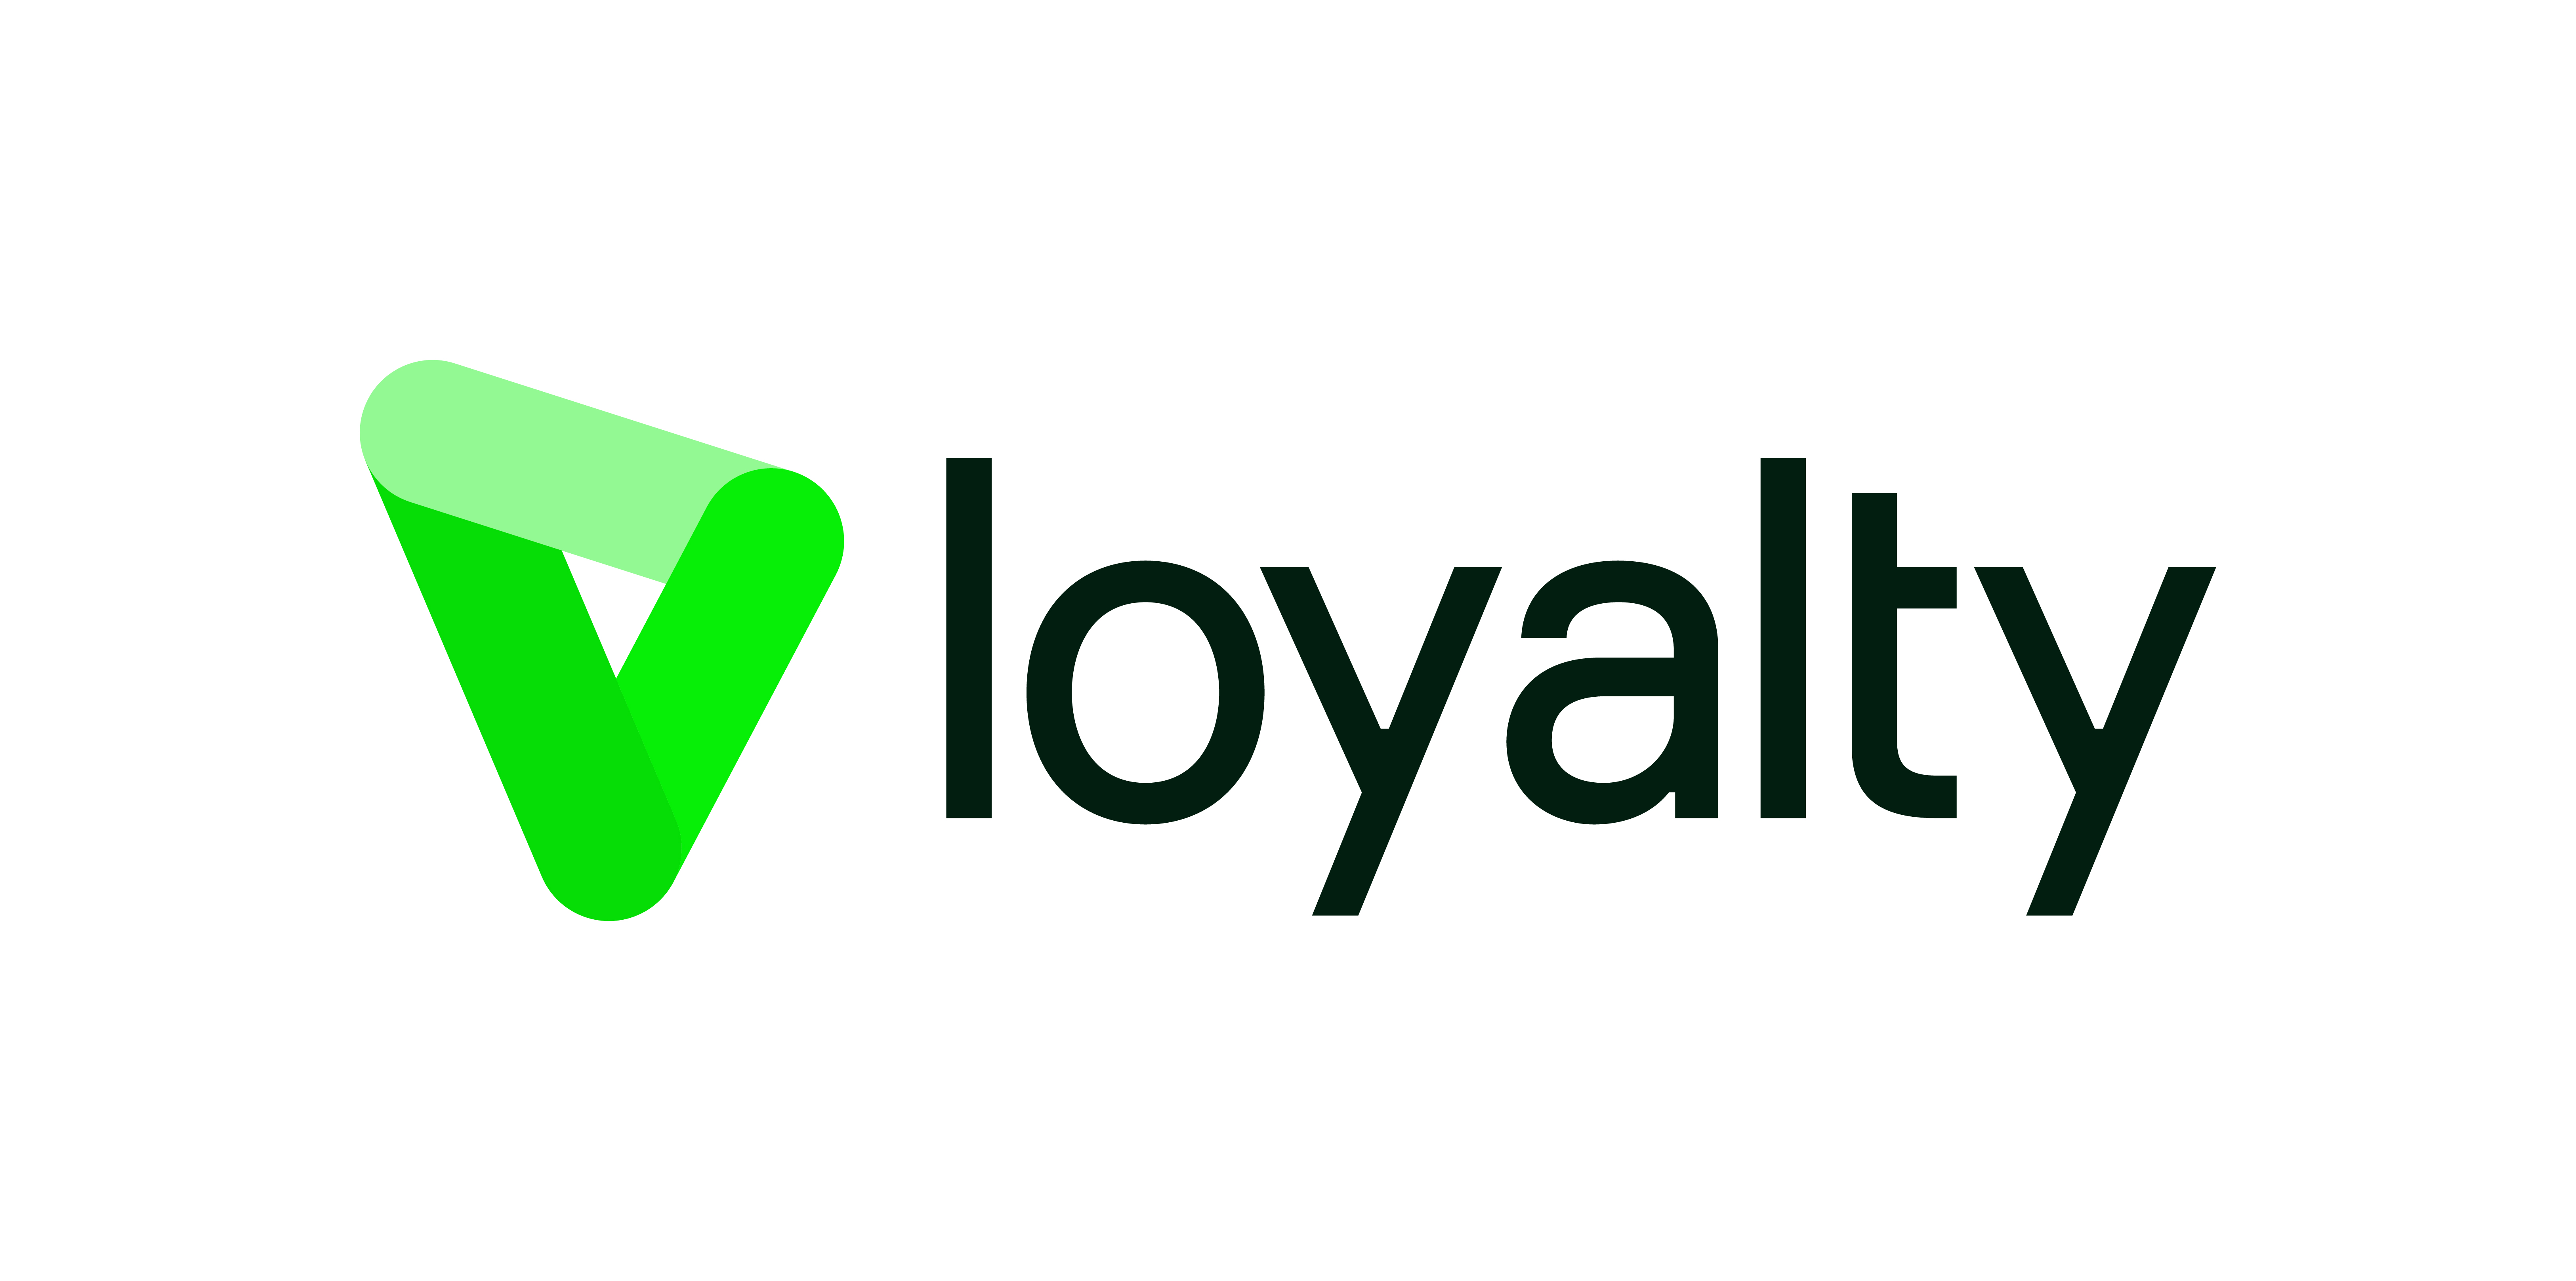 Loyalty Customer Service AS